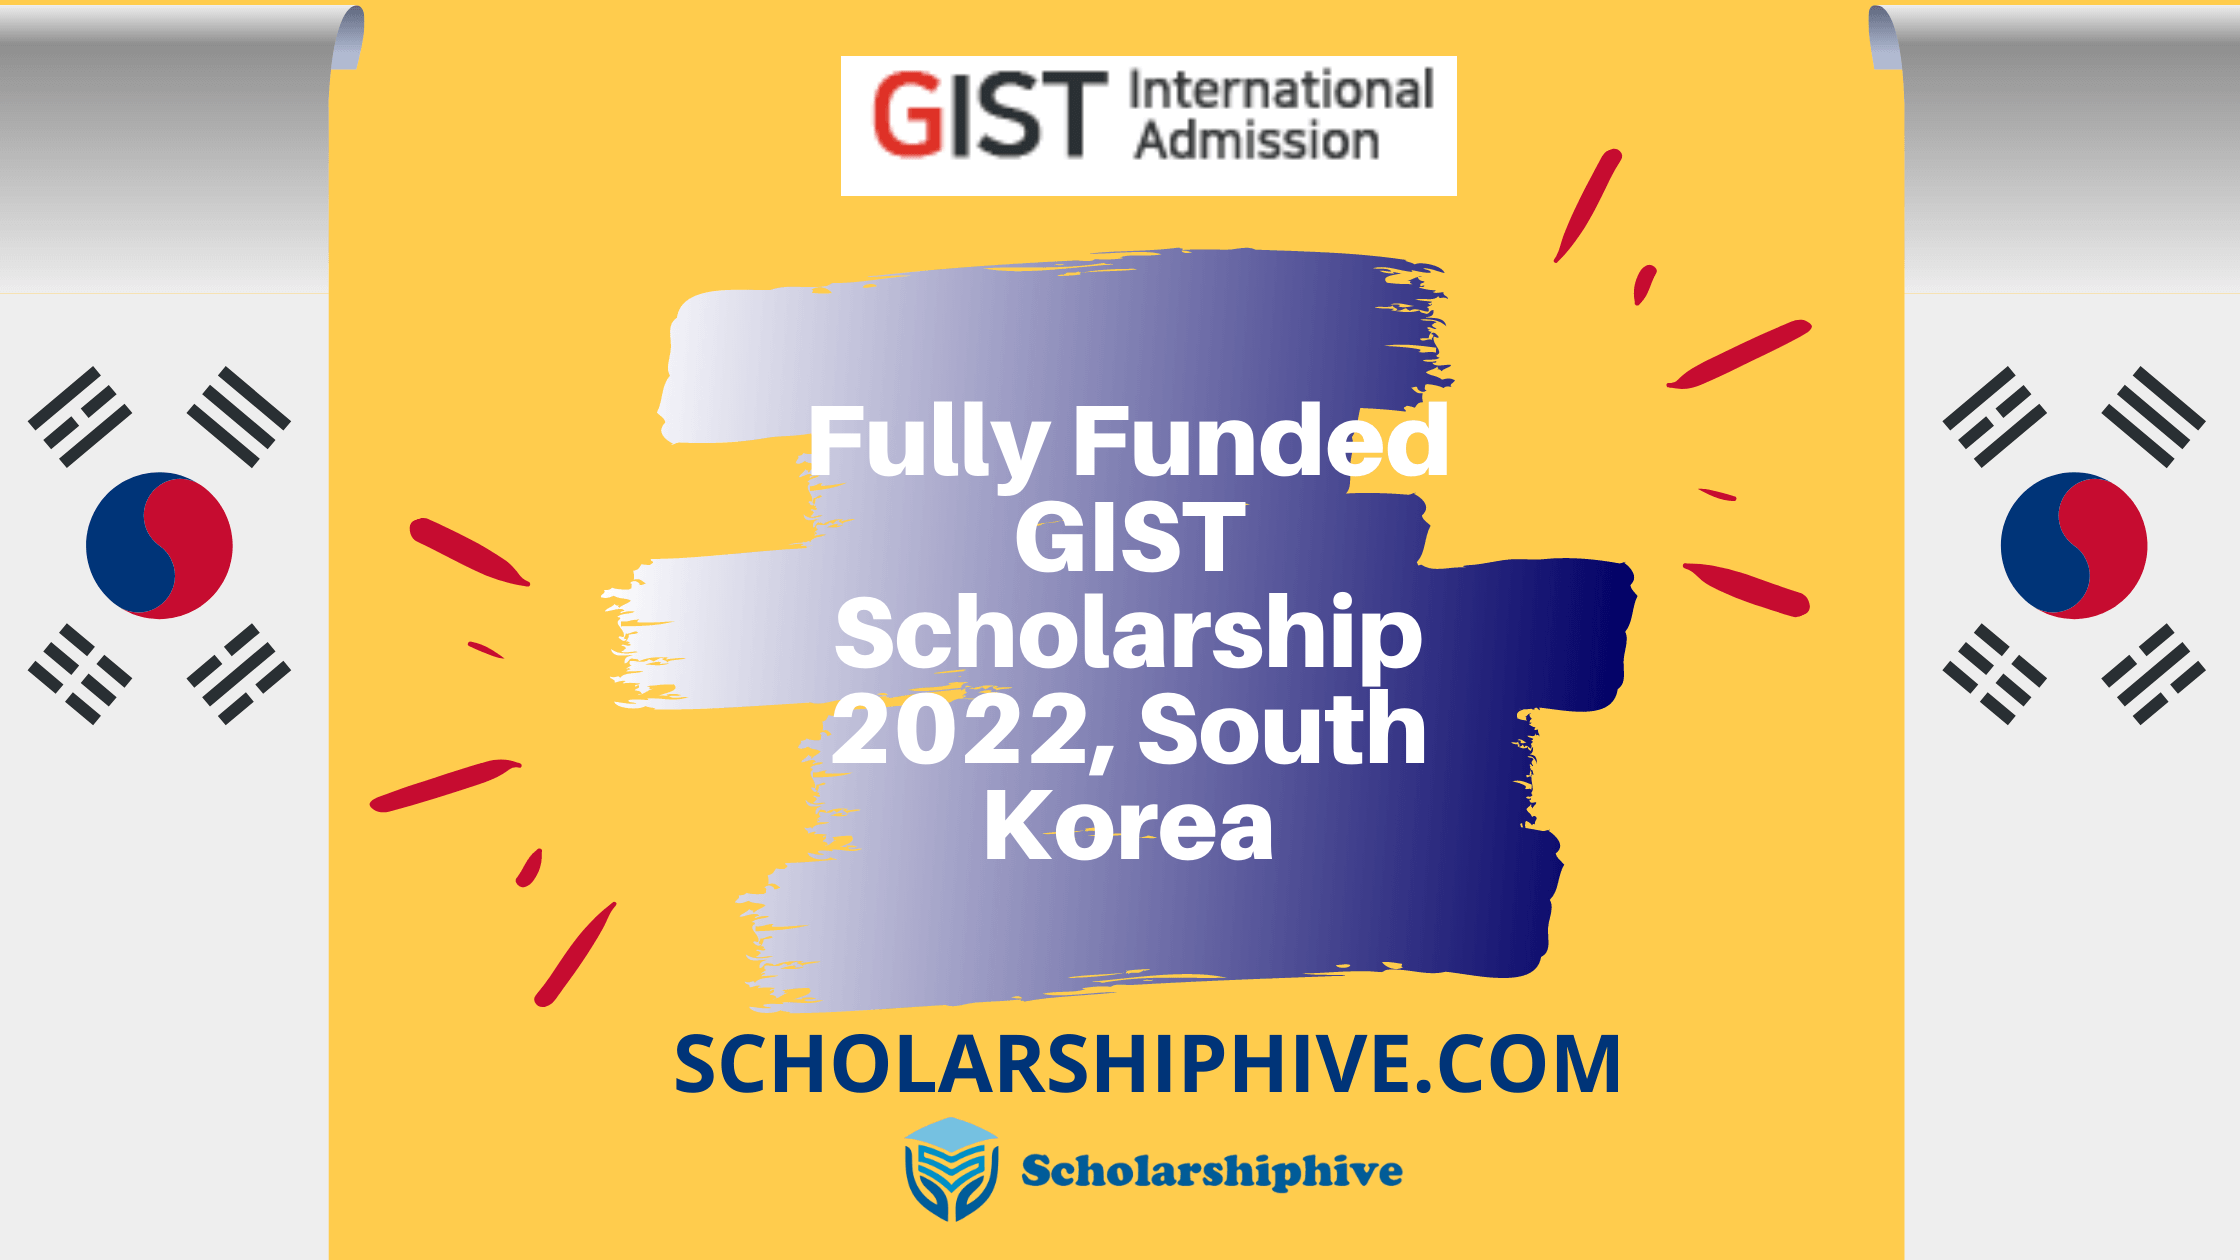 Fully Funded GIST Scholarship 2022, South Korea - Scholarshiphive